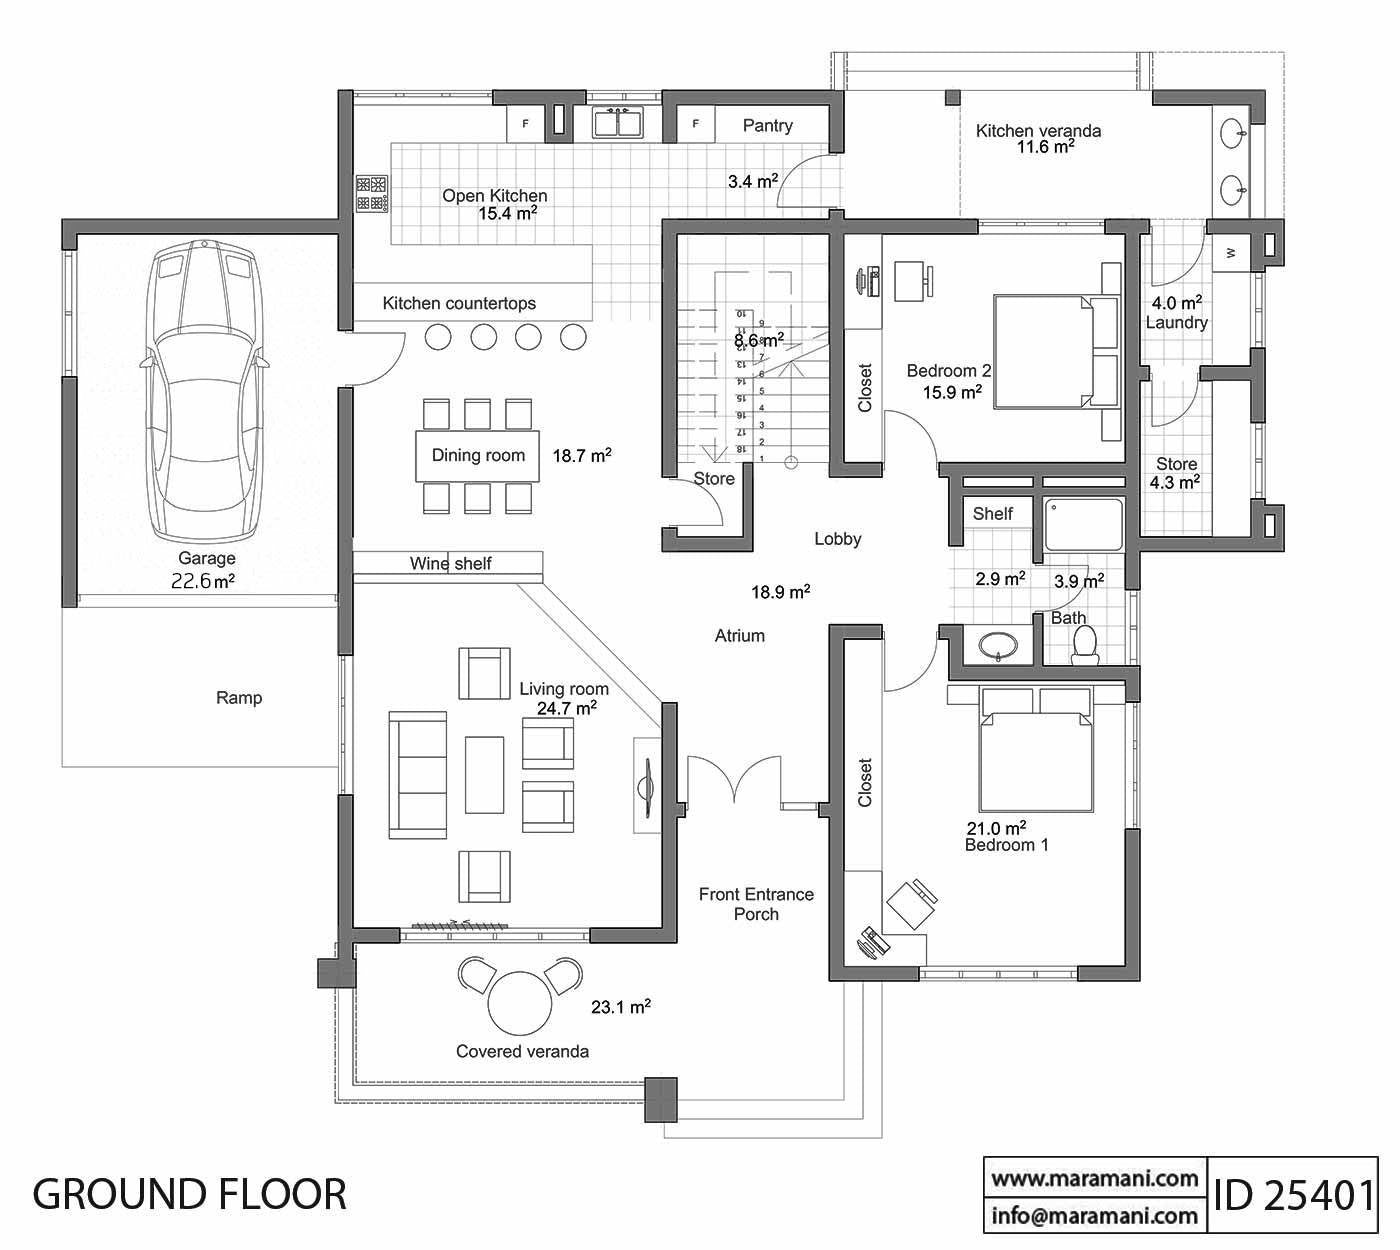 5 Bedroom House Plan - ID 25401